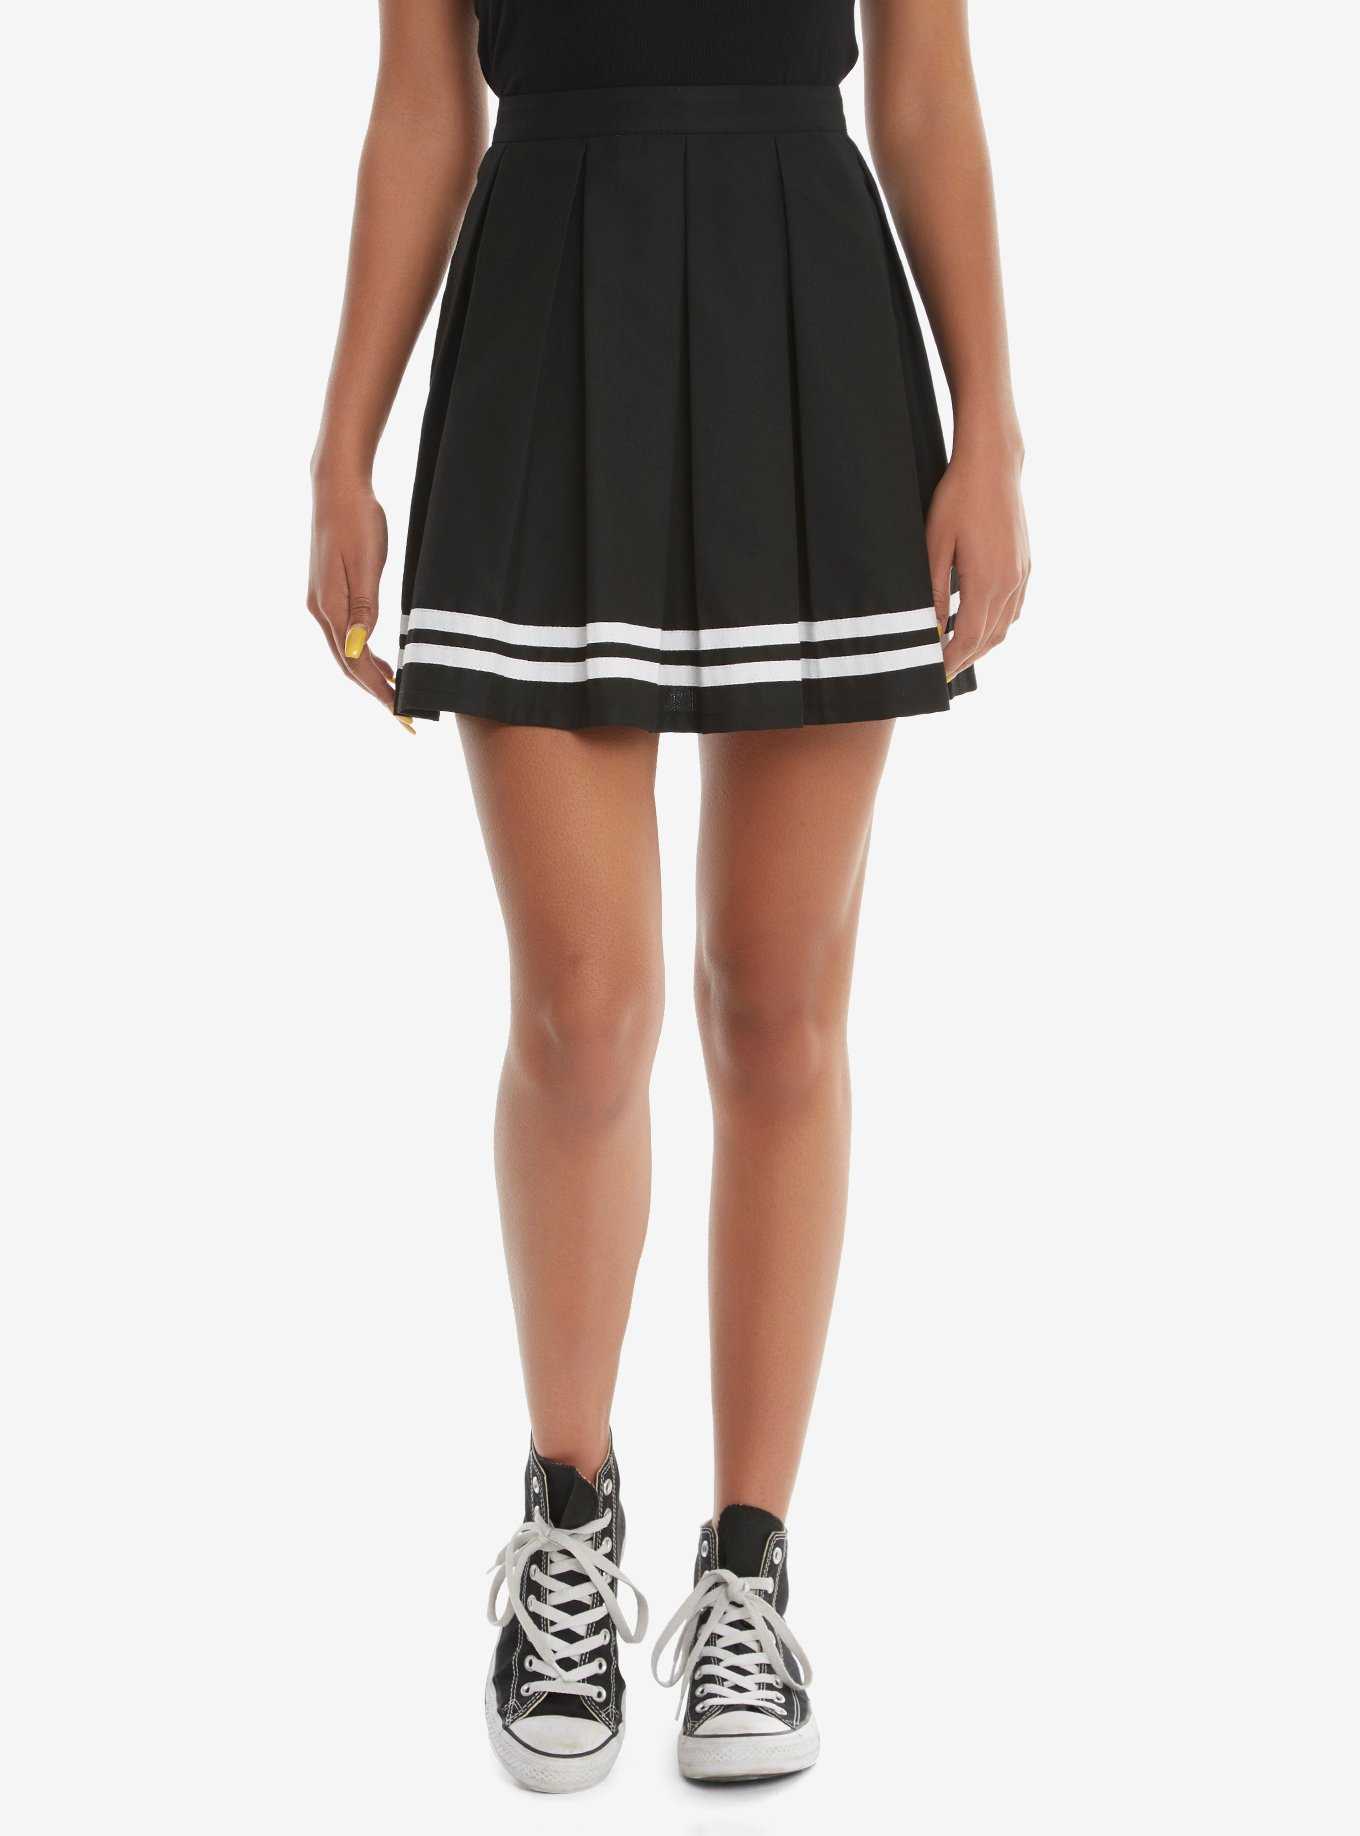 Black Pleated Cheer Skirt, , hi-res